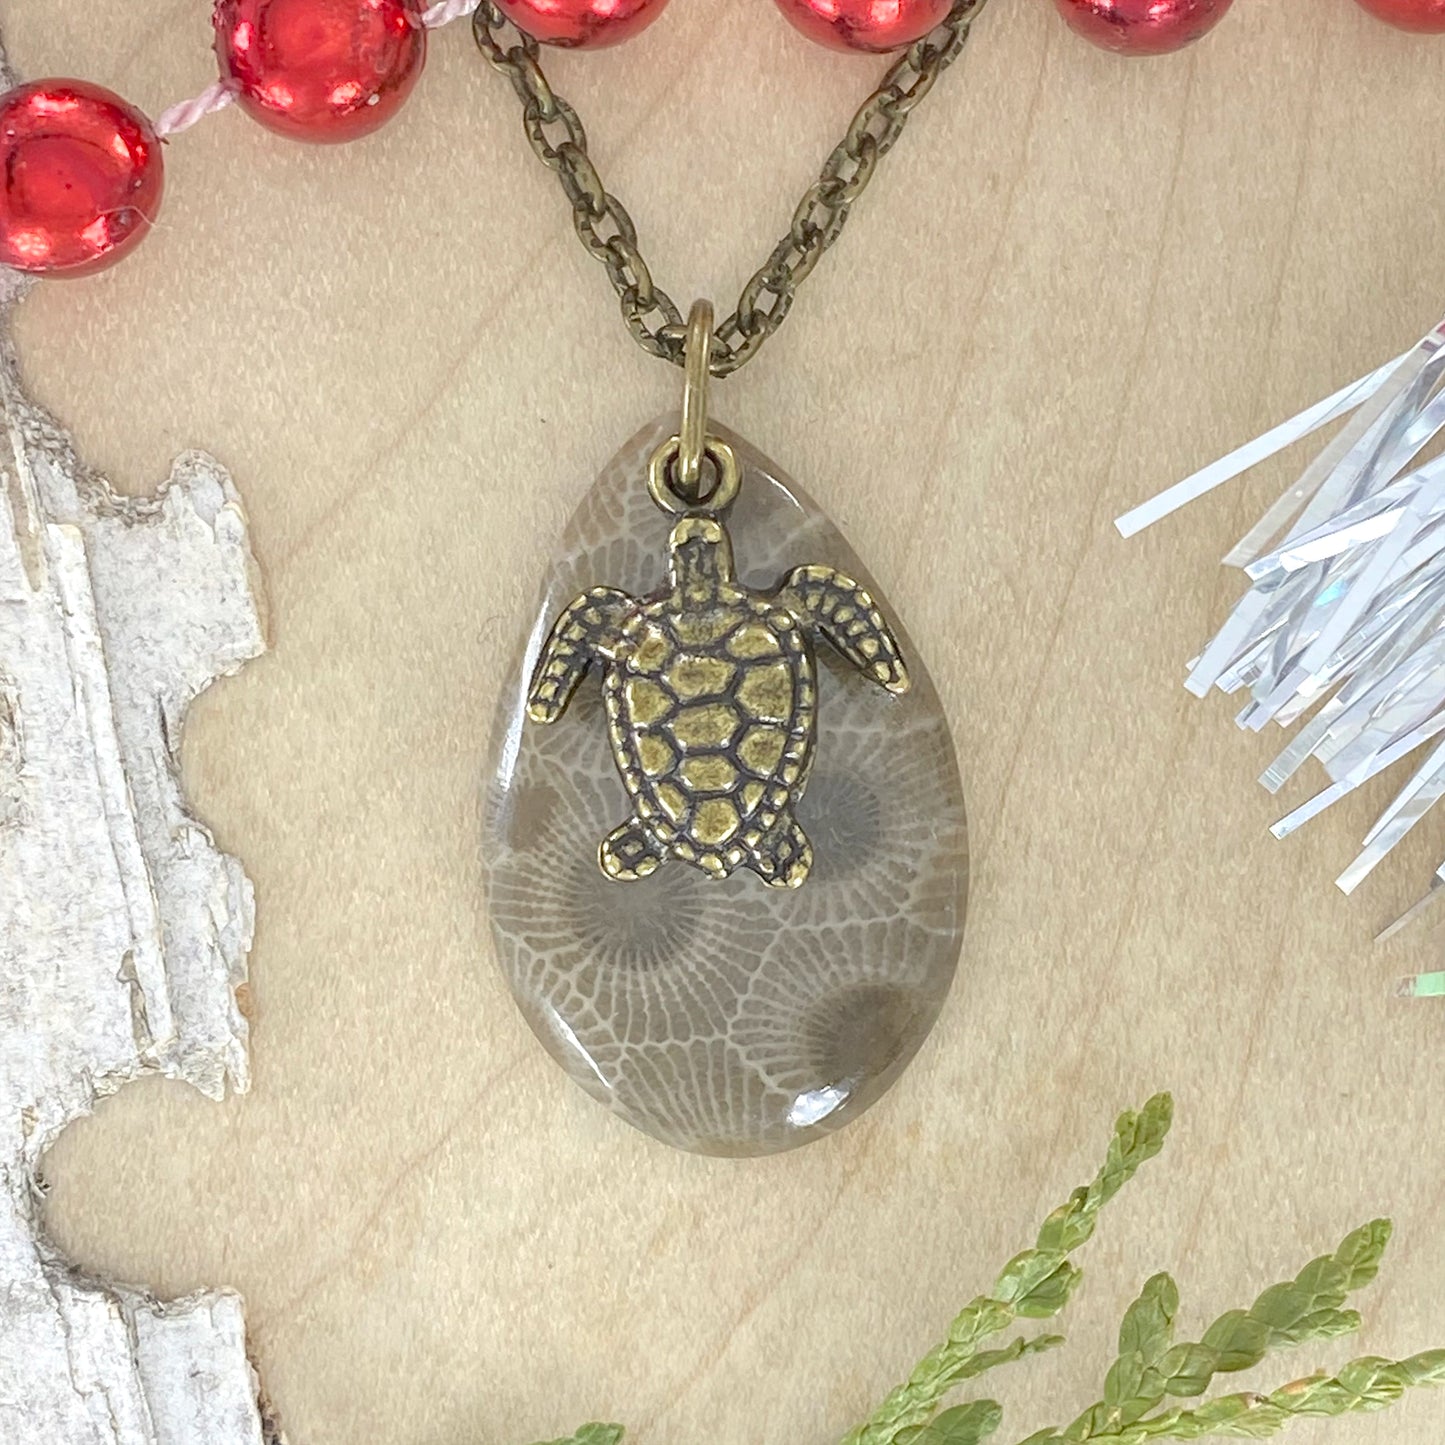 Petoskey Stone Turtle Charm Pendant Necklace - Stone Treasures by the Lake